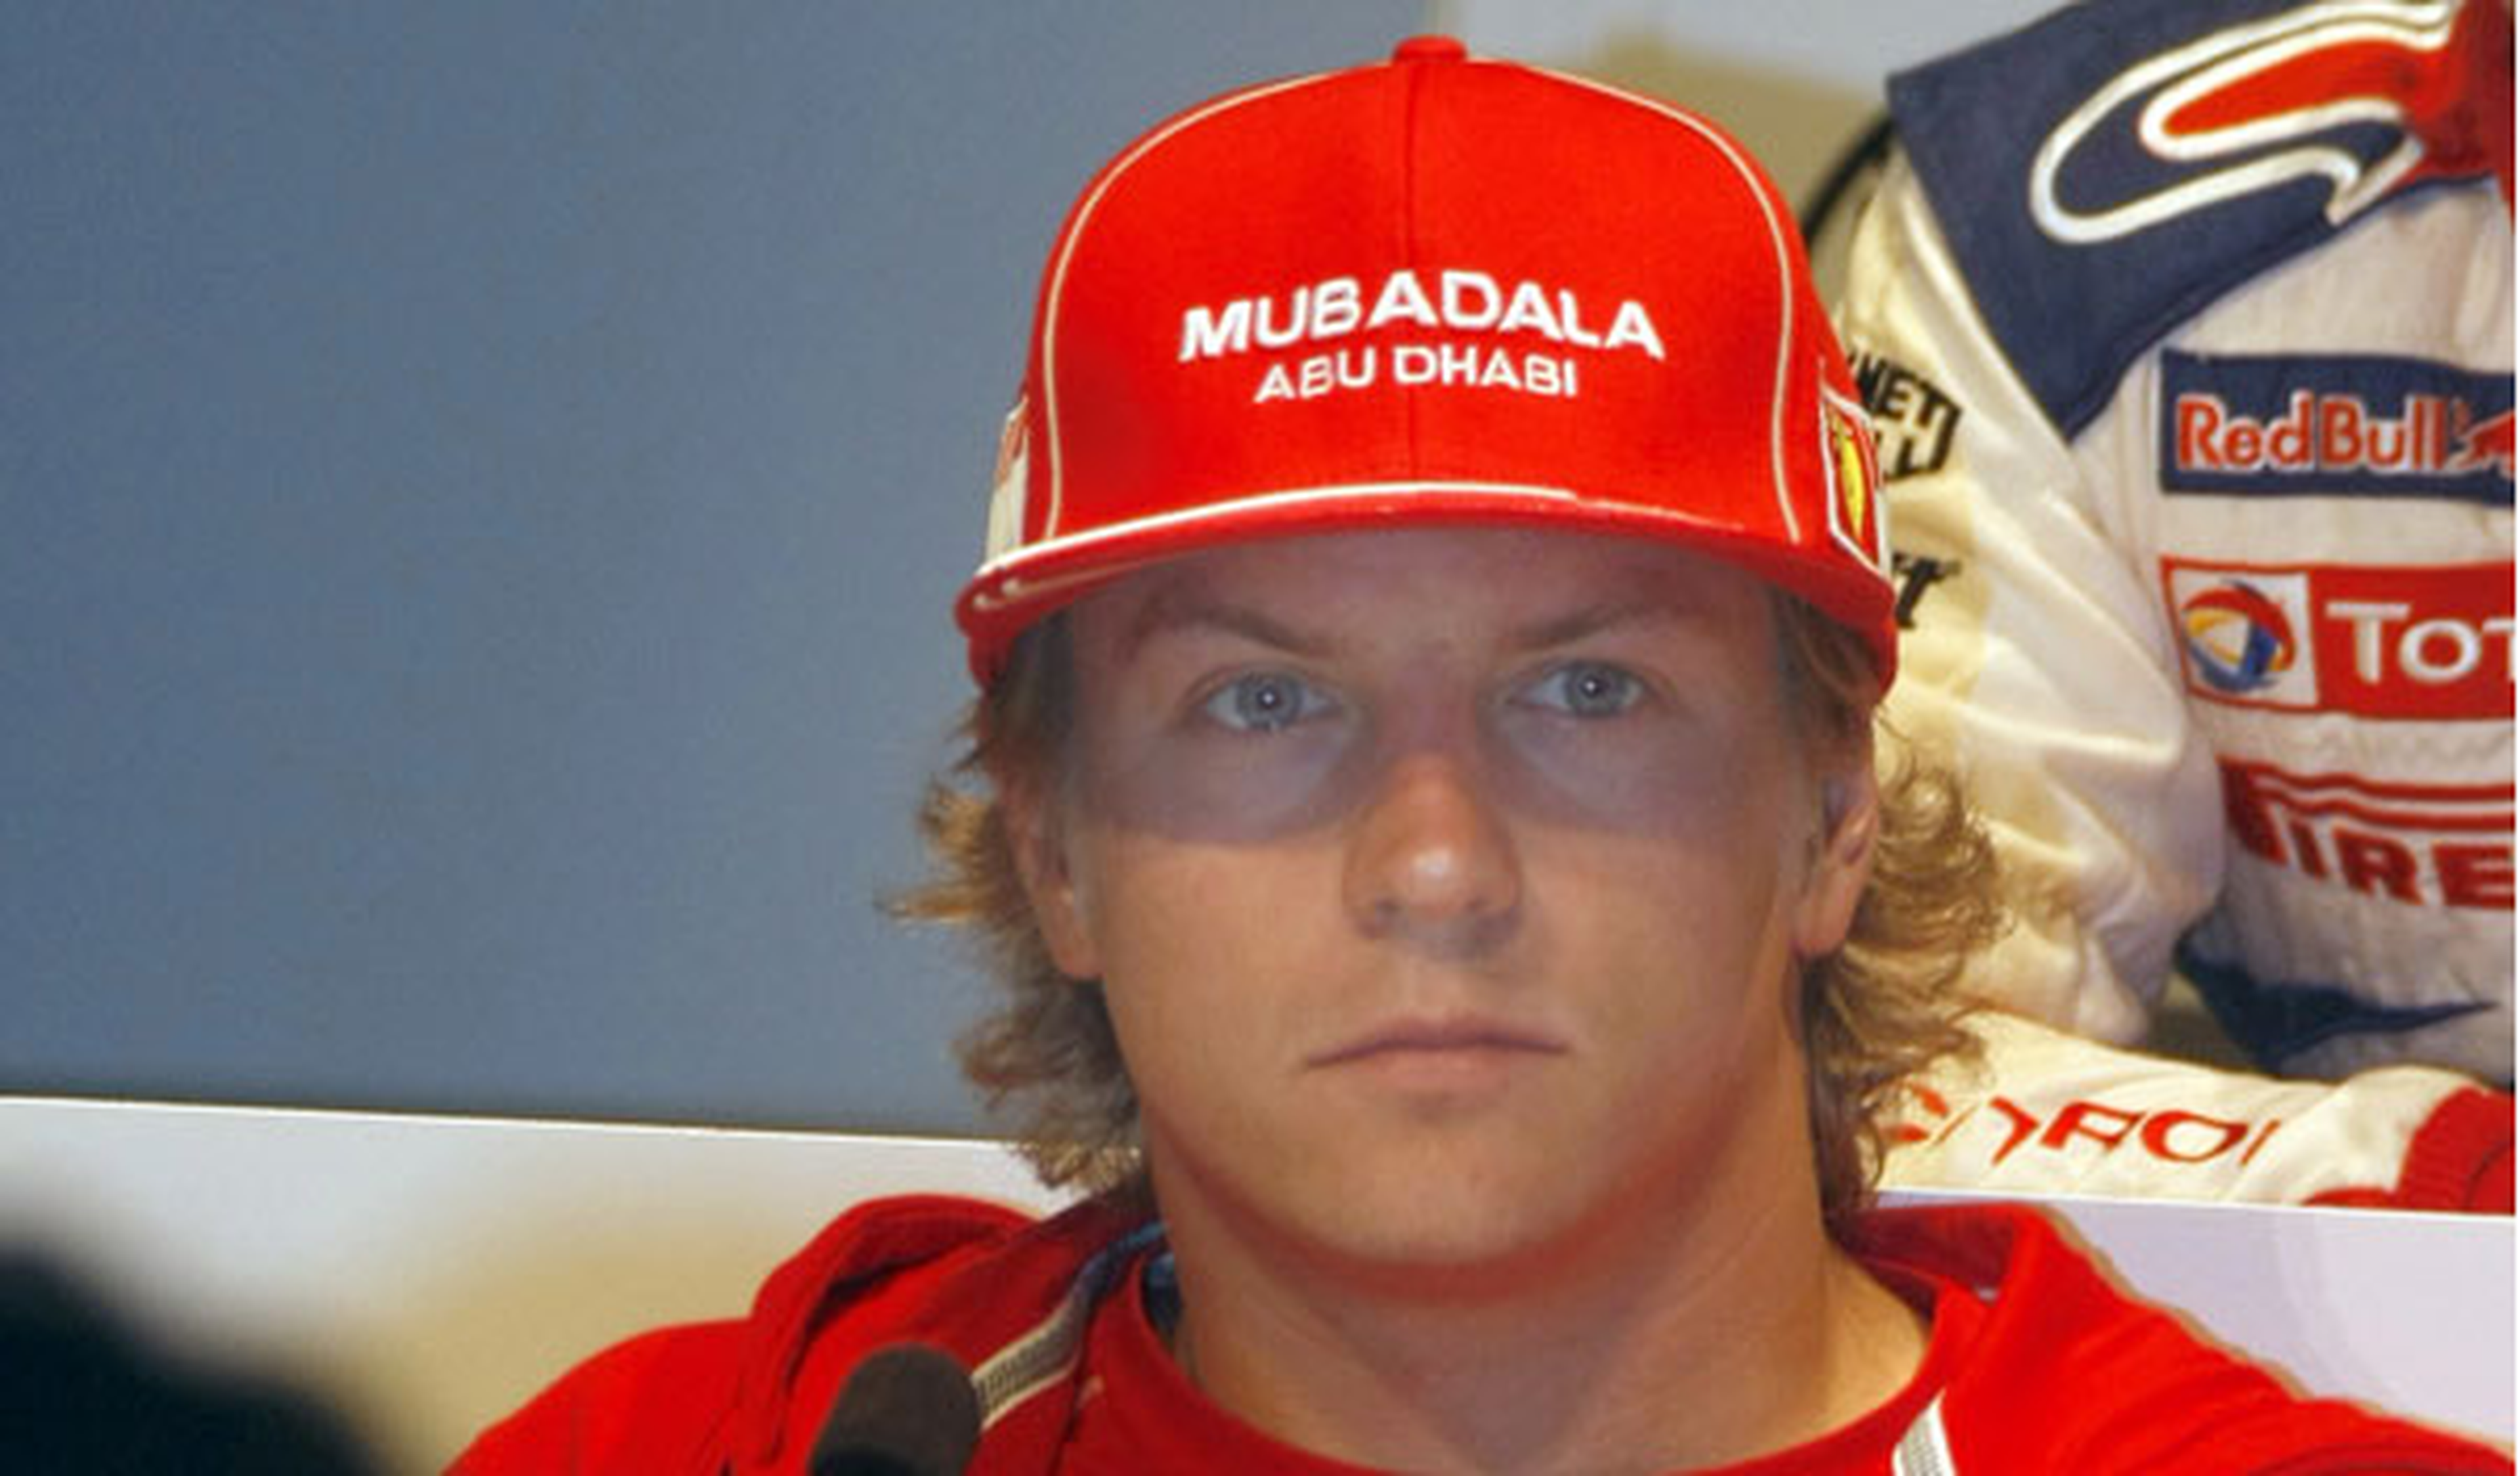 Kimi Räikkönen sale ileso de un accidente en moto de nieve